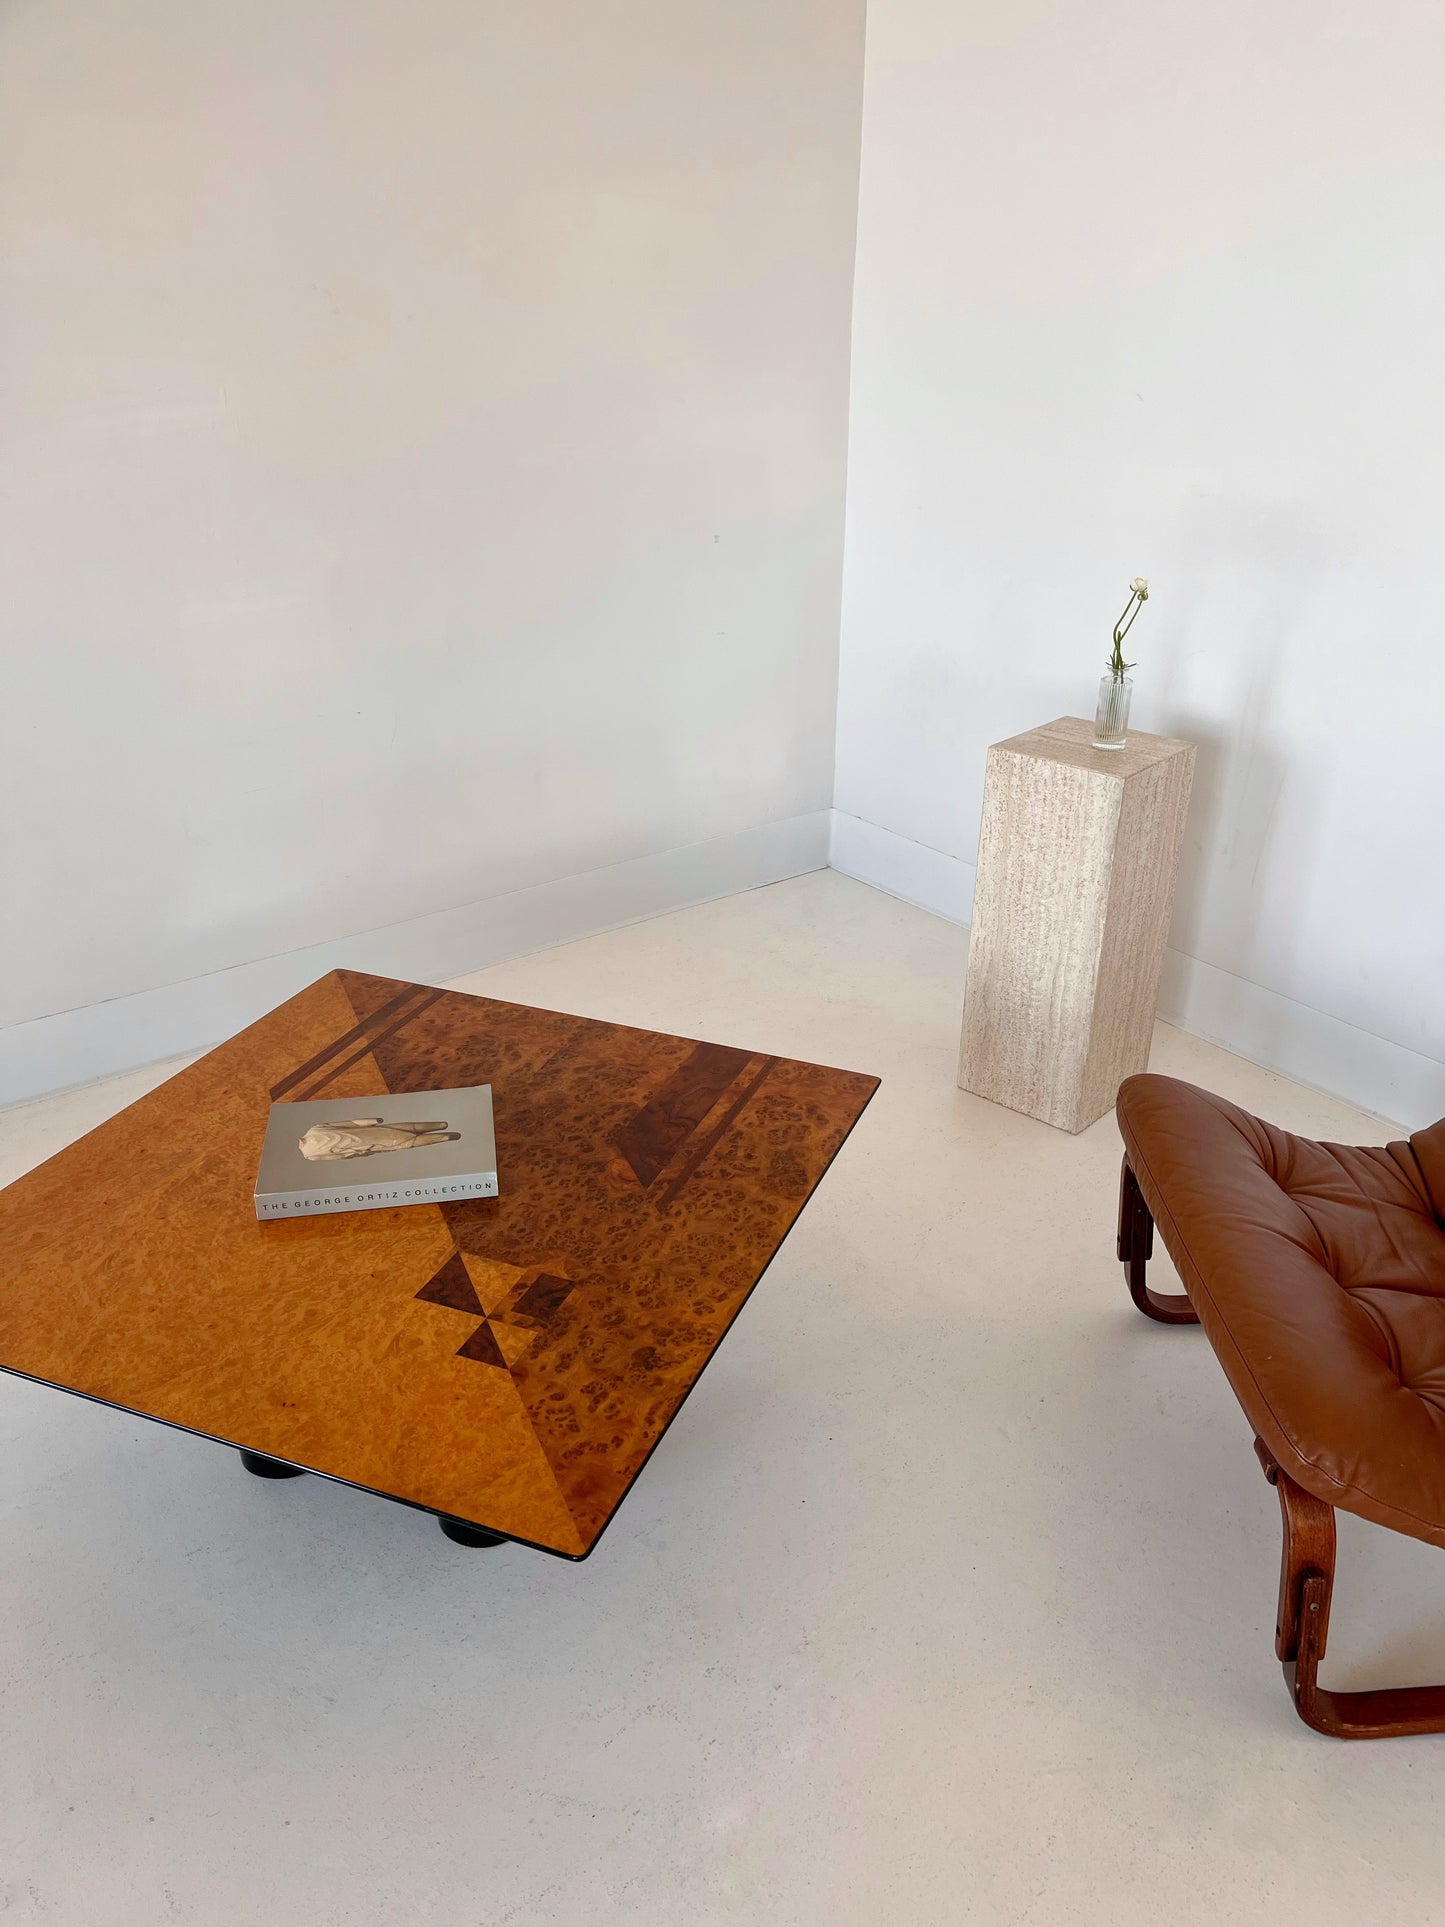 Table en café par Oscar Dell Arredamento pour Miniforms faite en Italie.